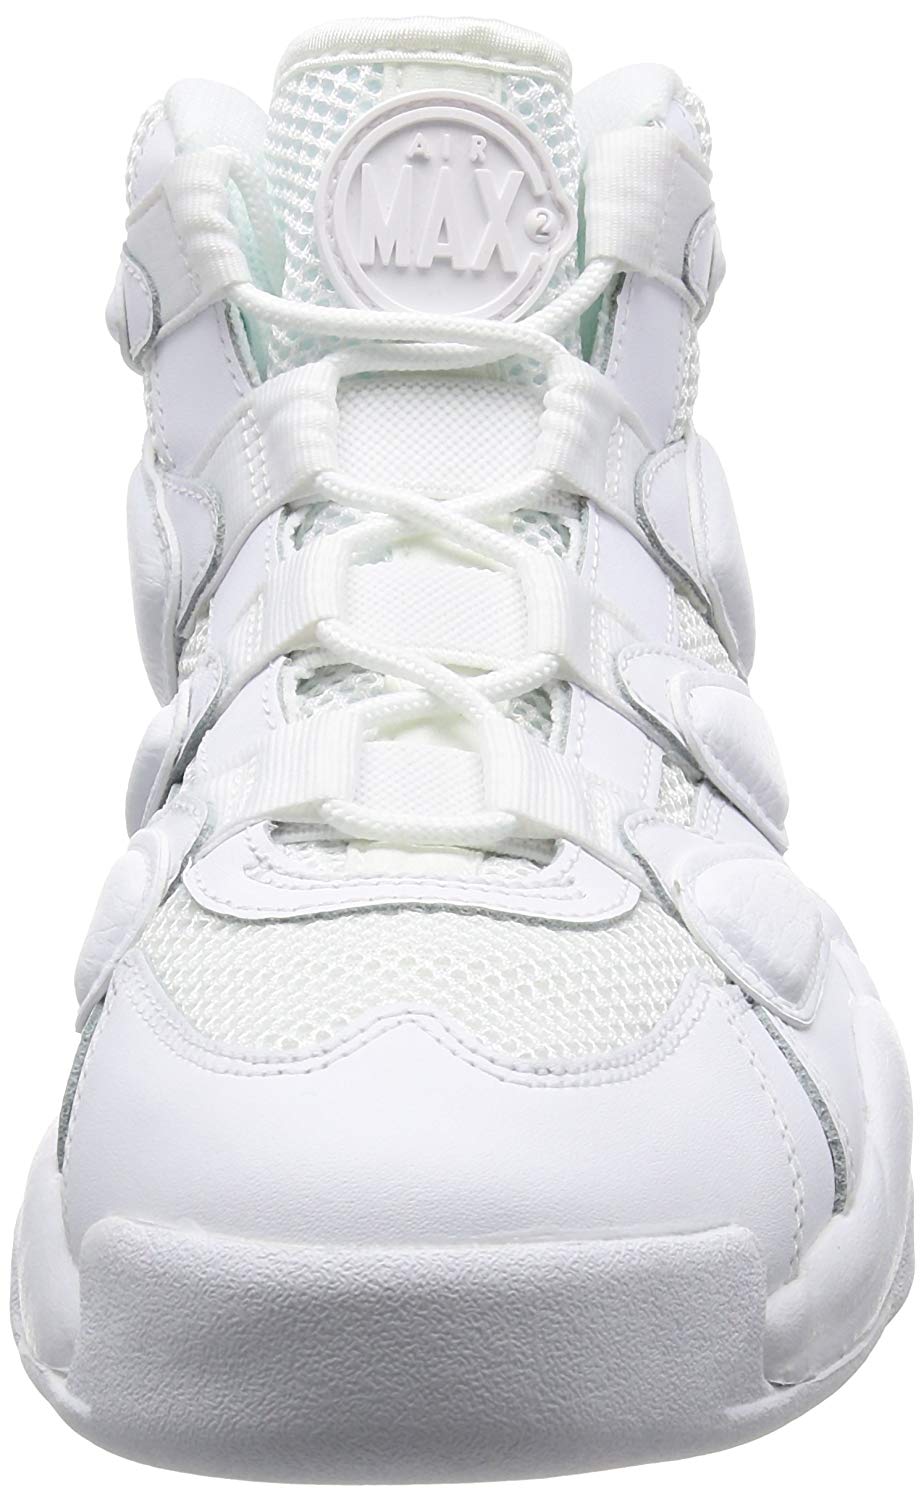 Nike Mens Air Max 2 Uptempo Basketball Shoes